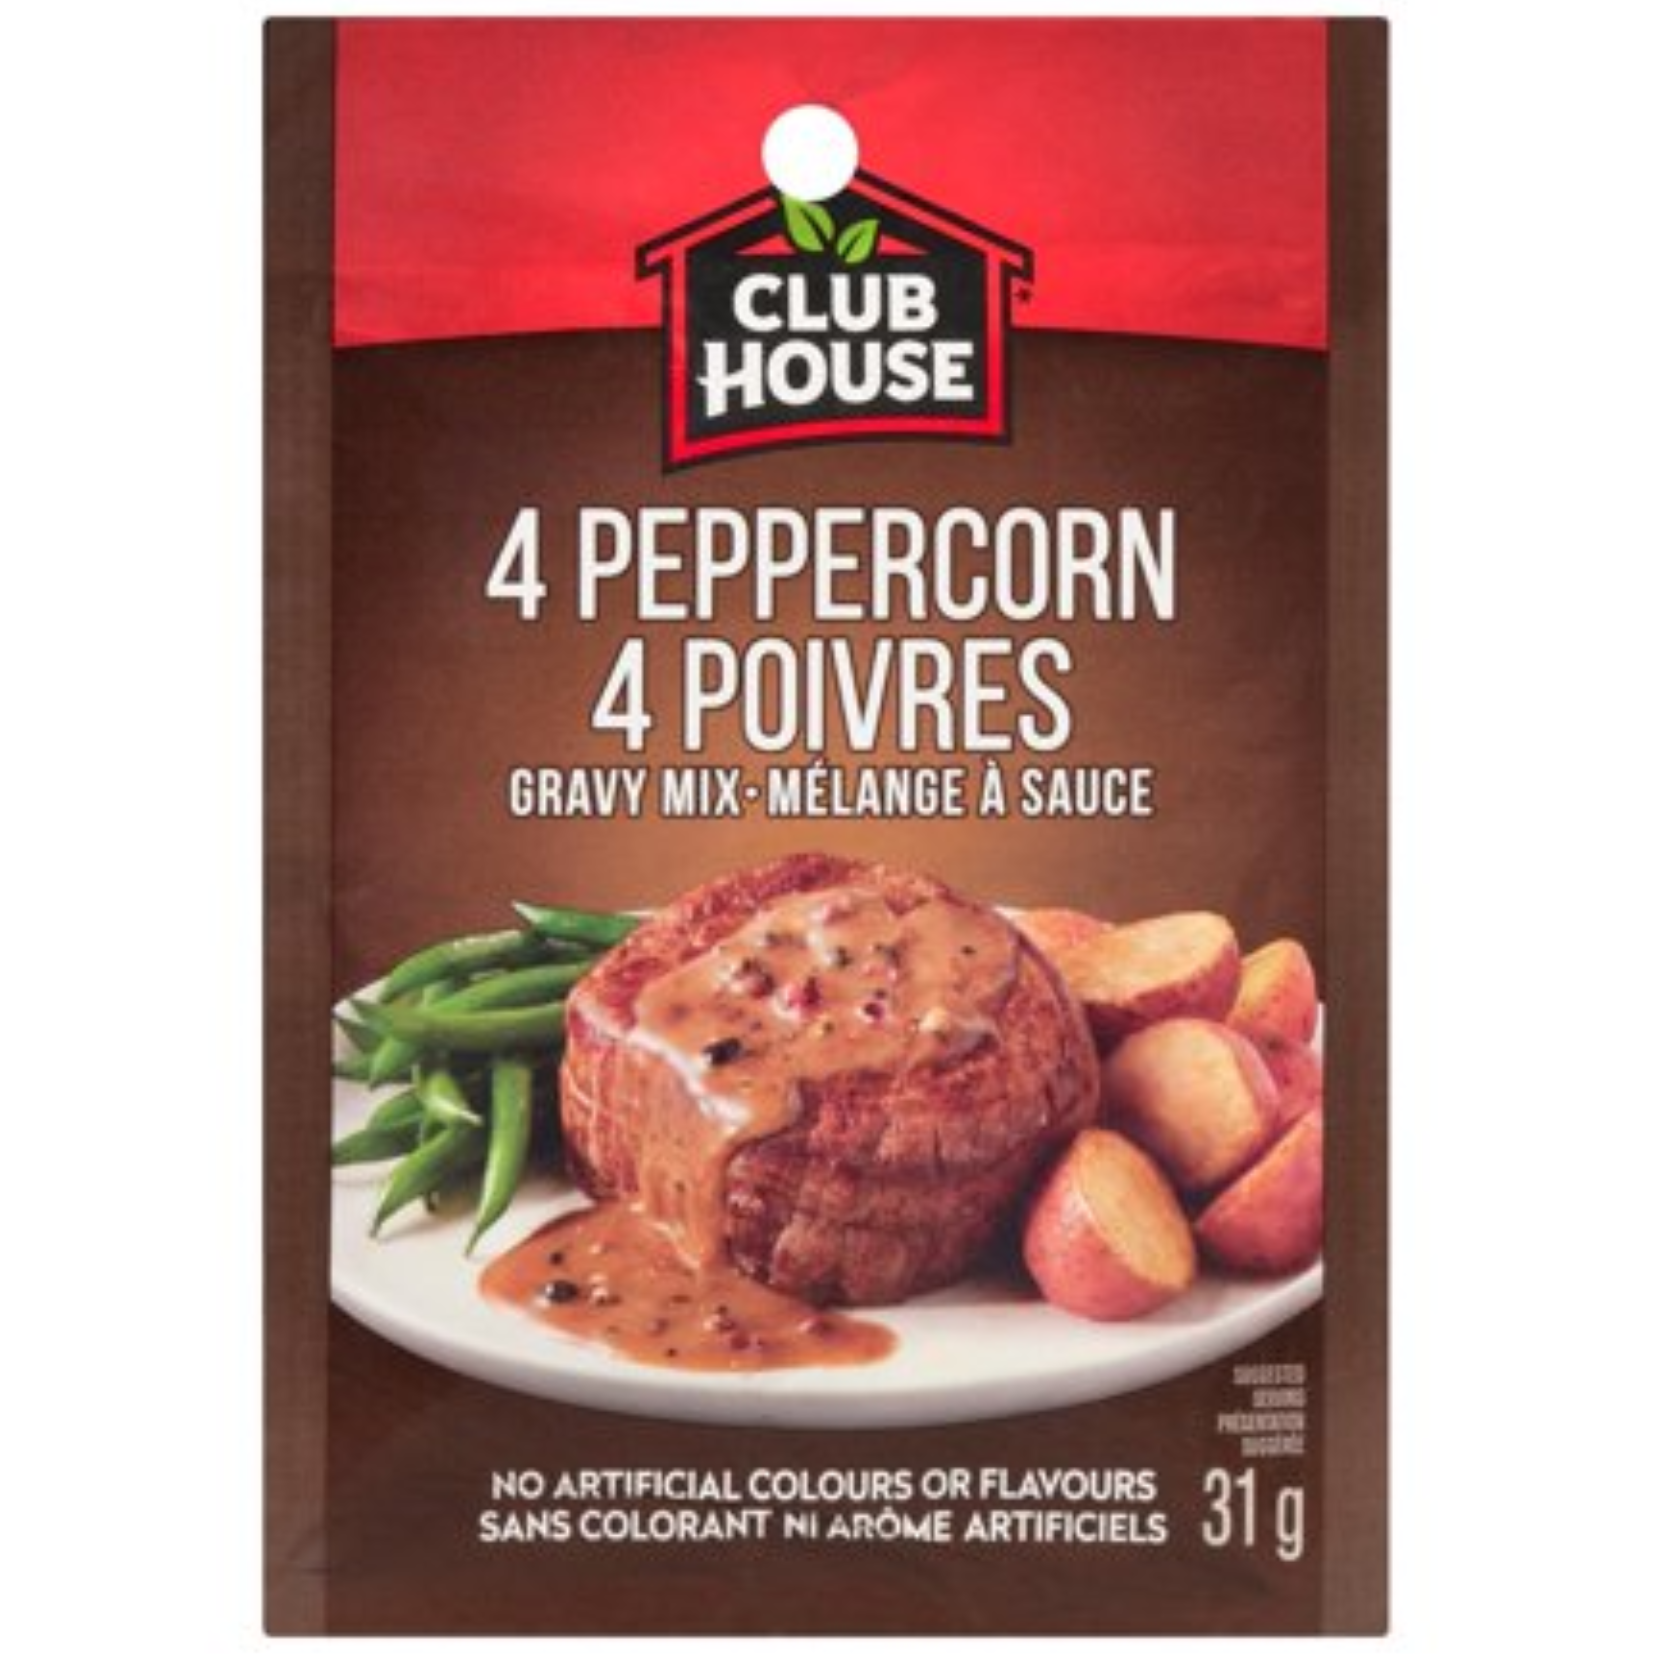 Club House 4 Peppercorn Gravy Mix 31g